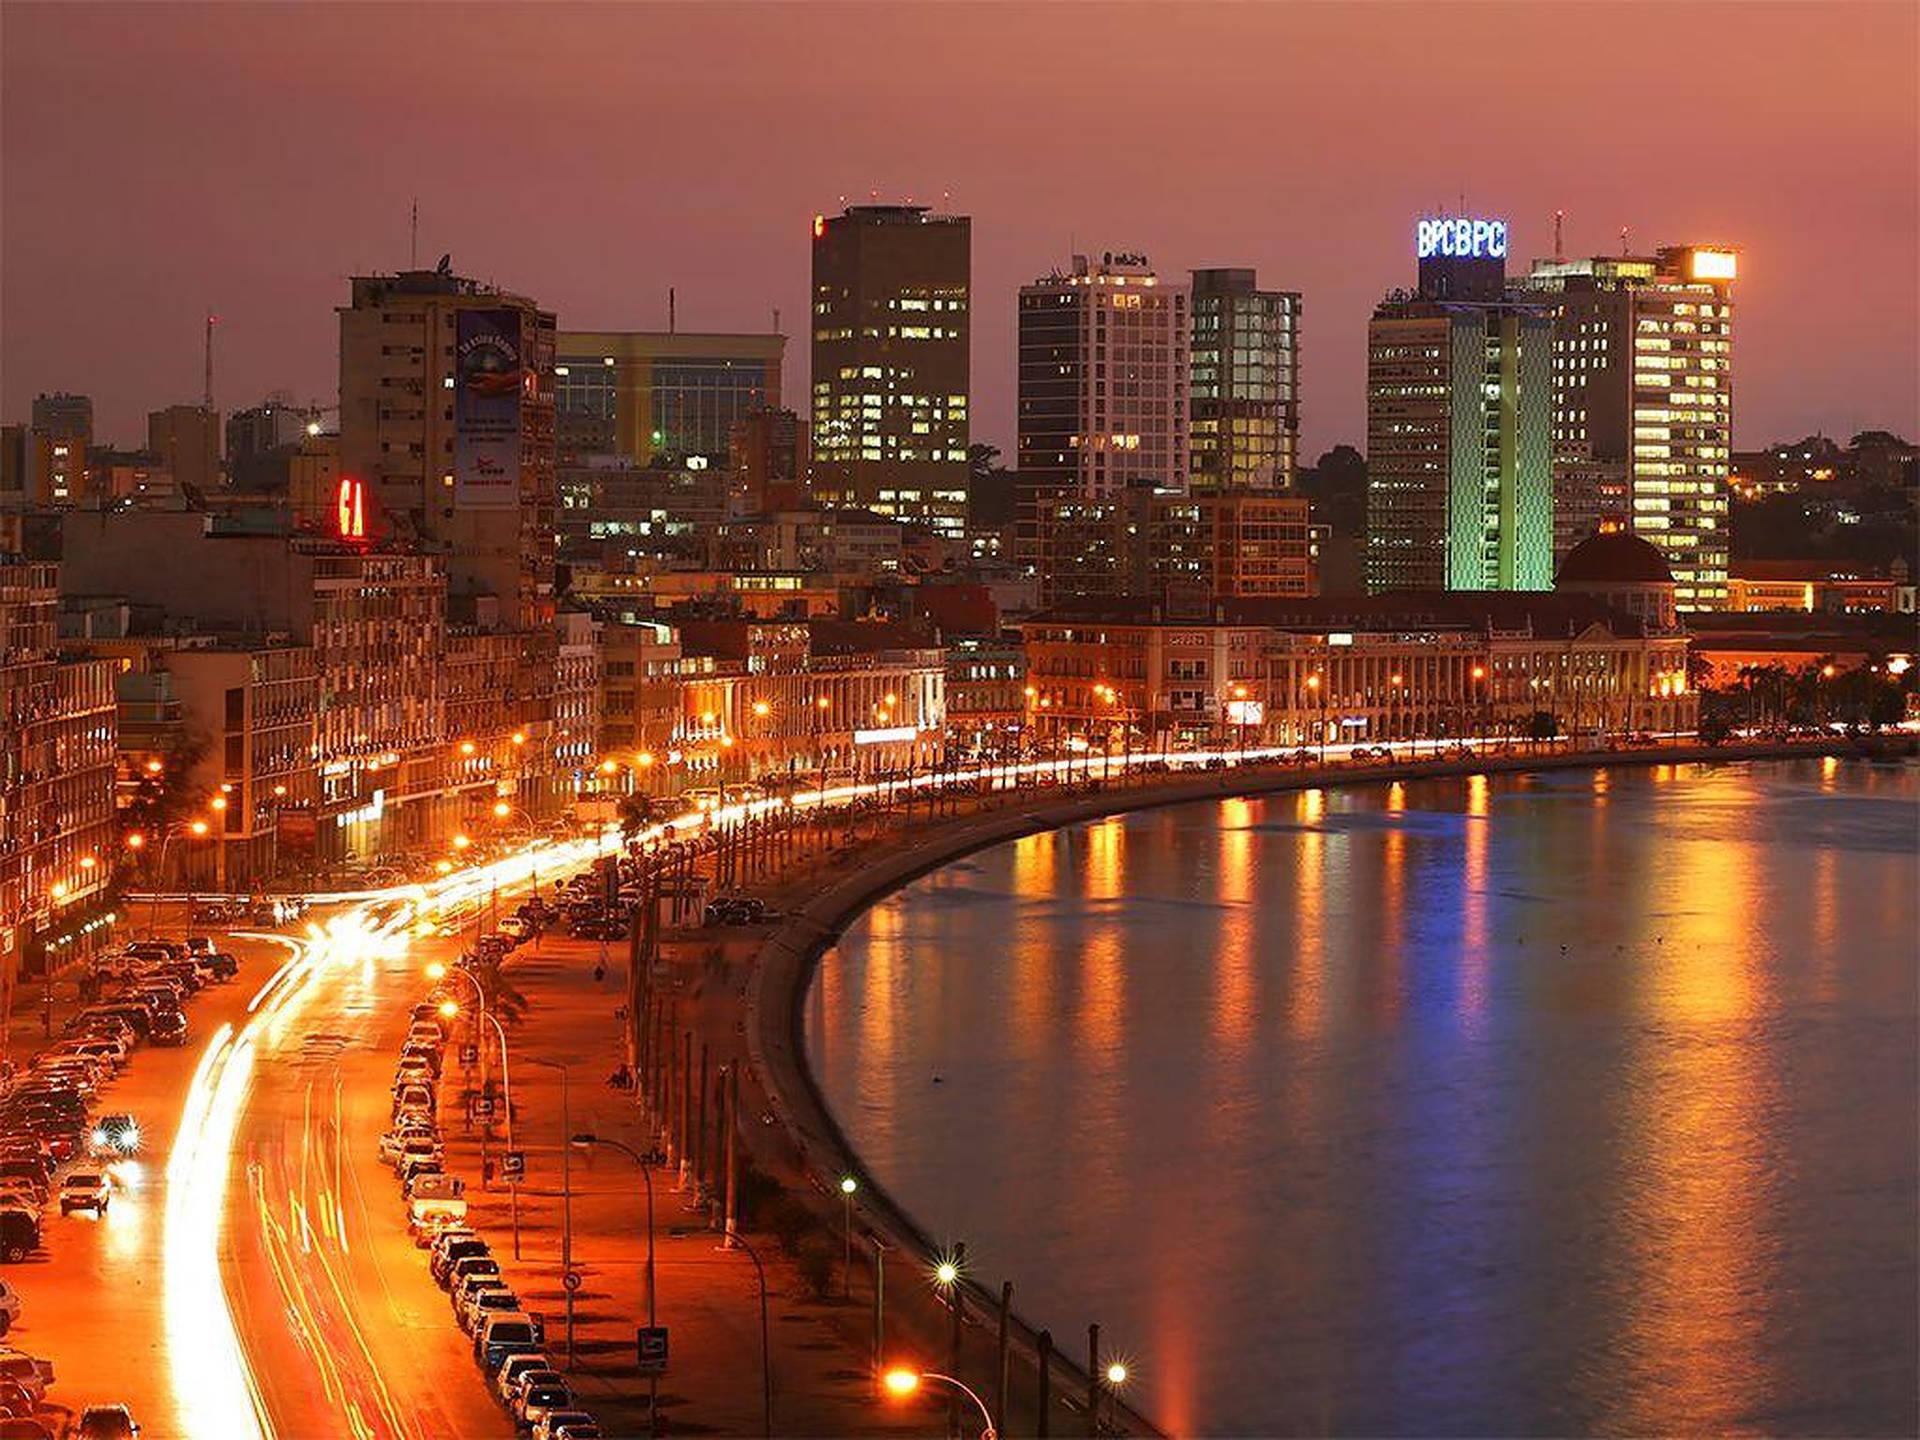 Luandabucht Angola Bei Nacht. Wallpaper